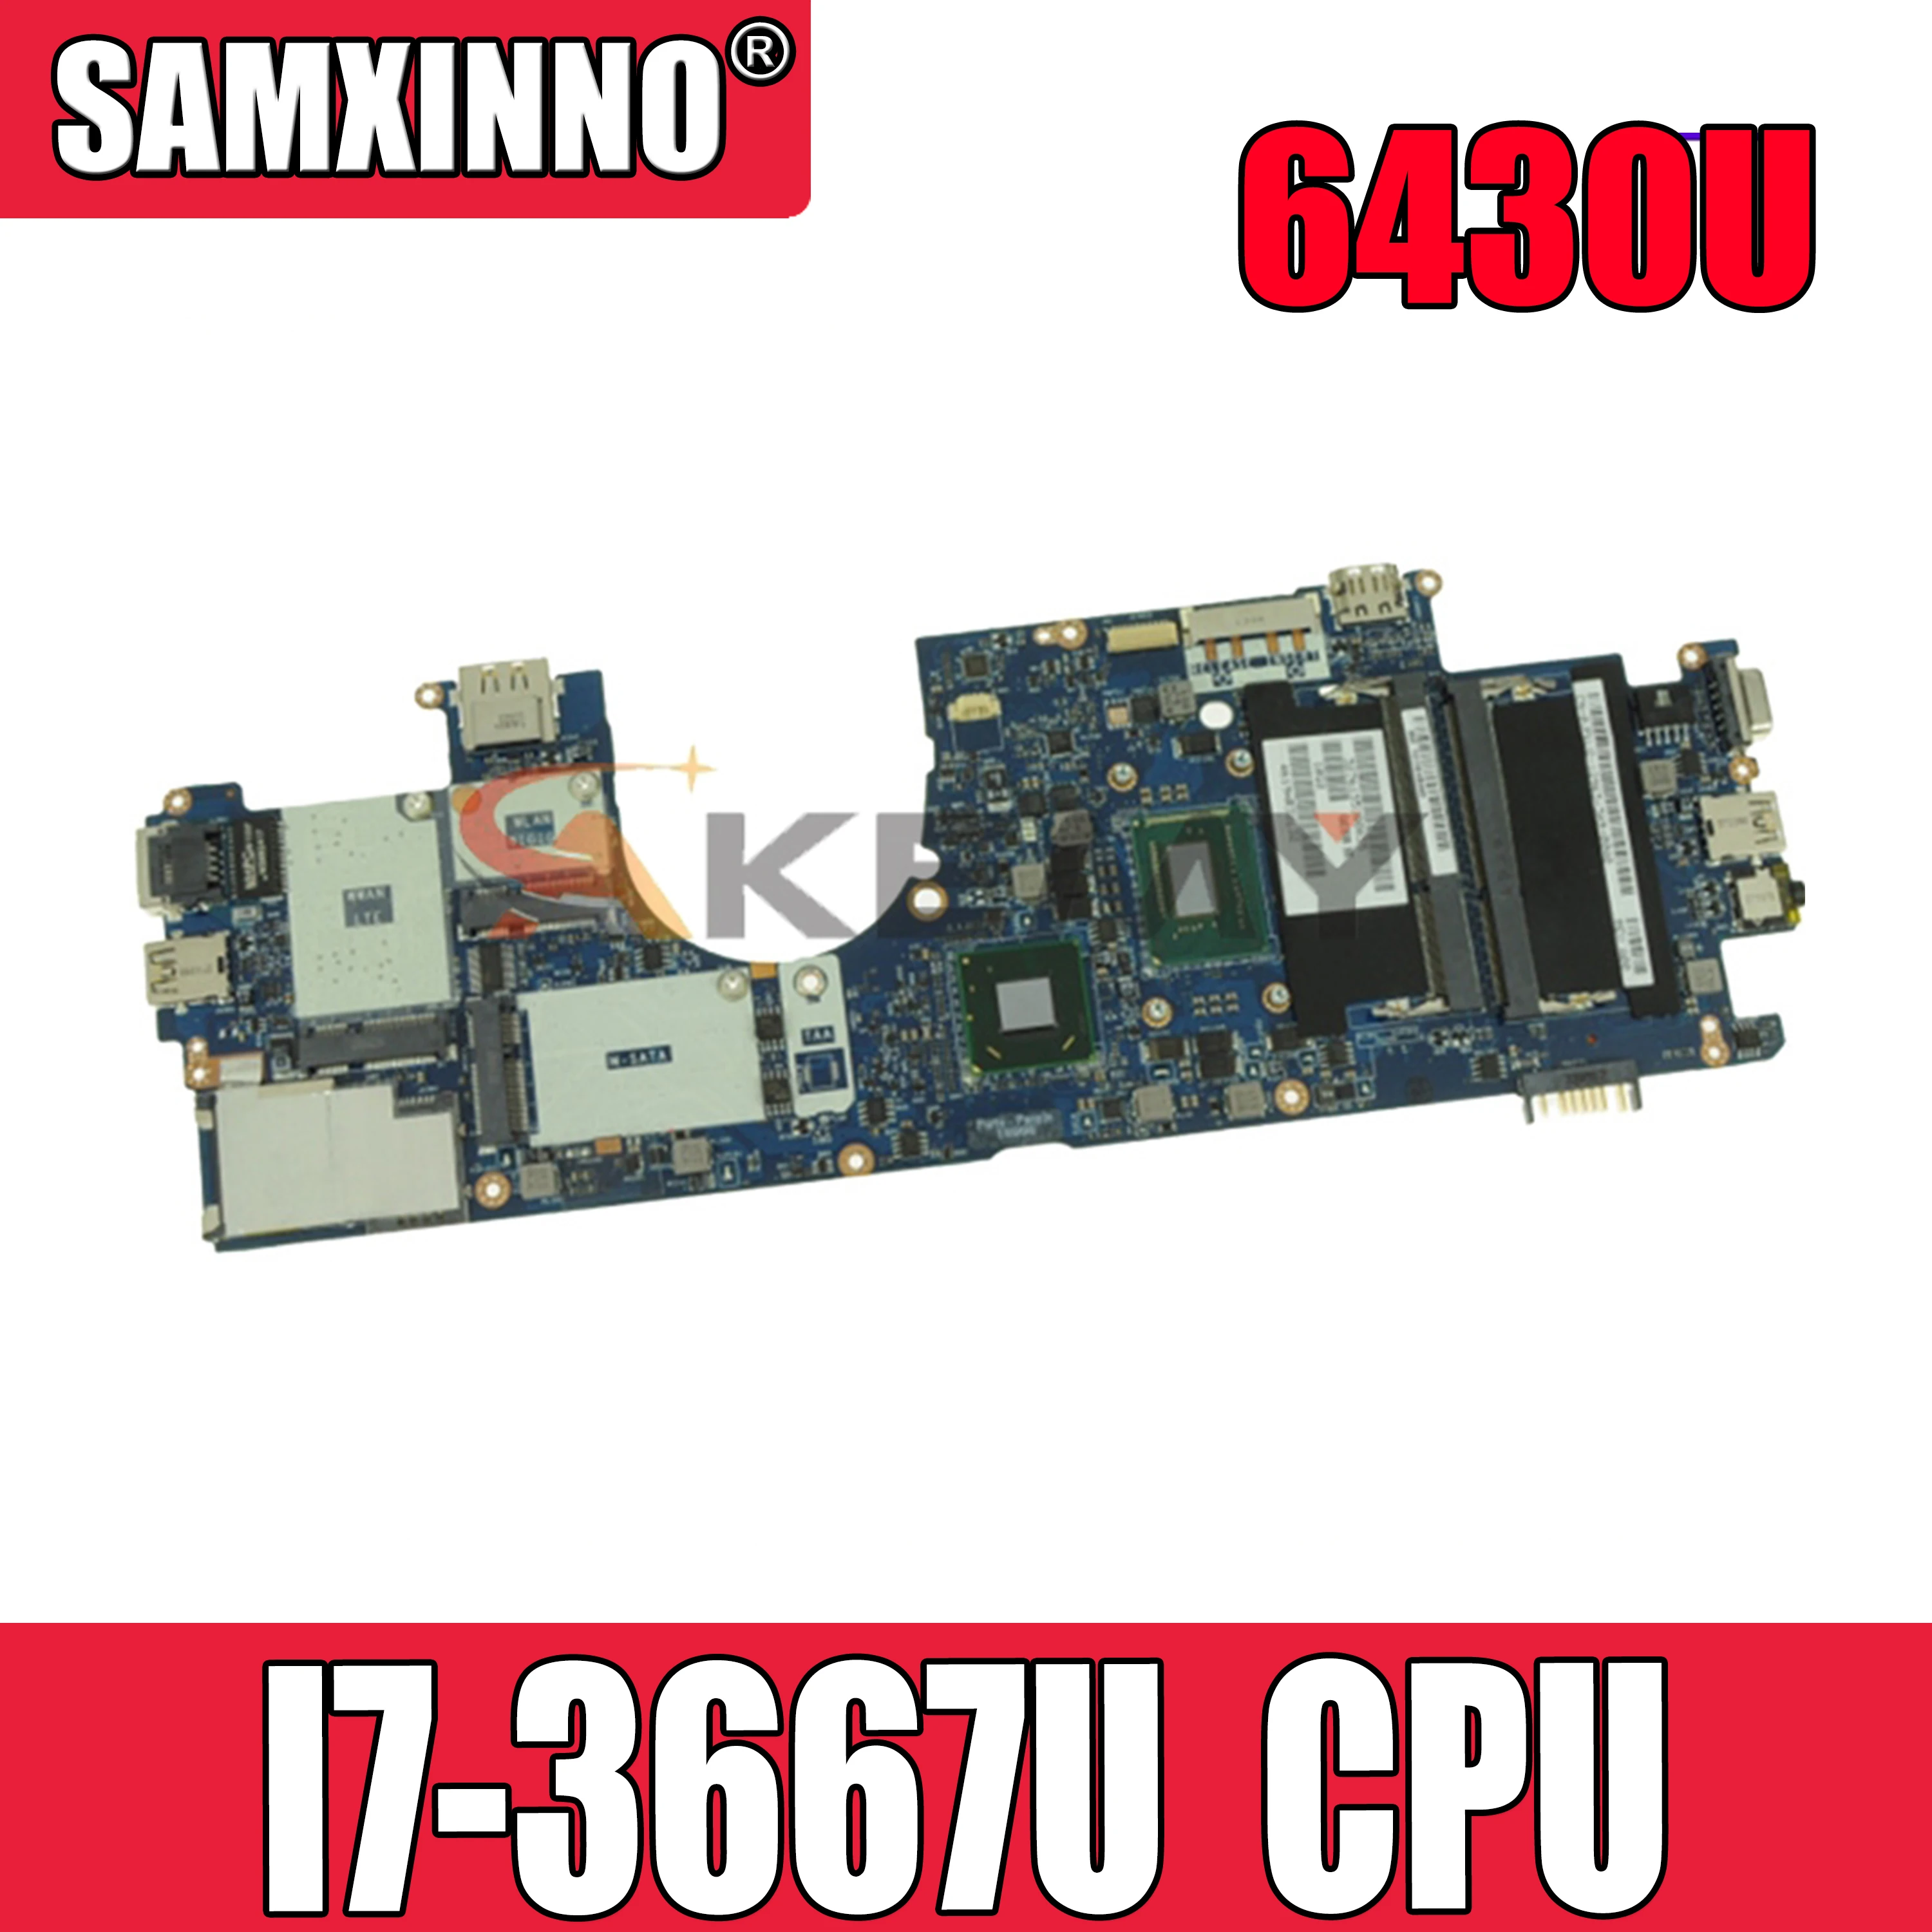 

Original Laptop motherboard For DELL Latitude 6430U I7-3667U Mainboard CN-0F31M6 0F31M6 QCZ00 LA-8831P SLJ8A